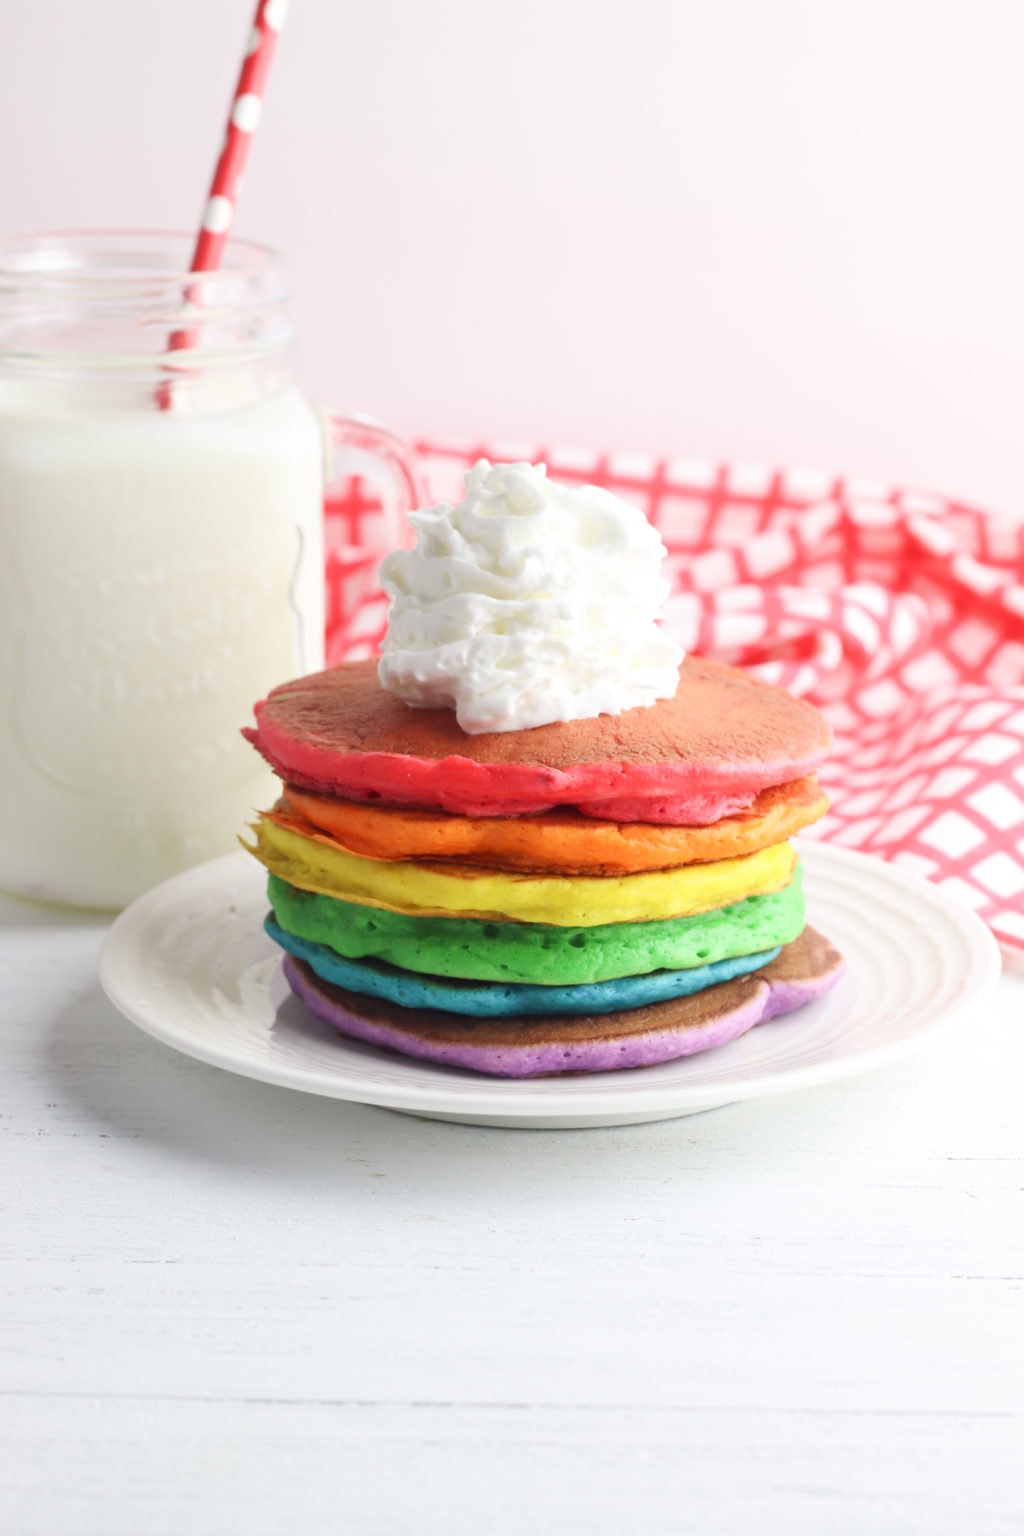 How to serve rainbow pancakes